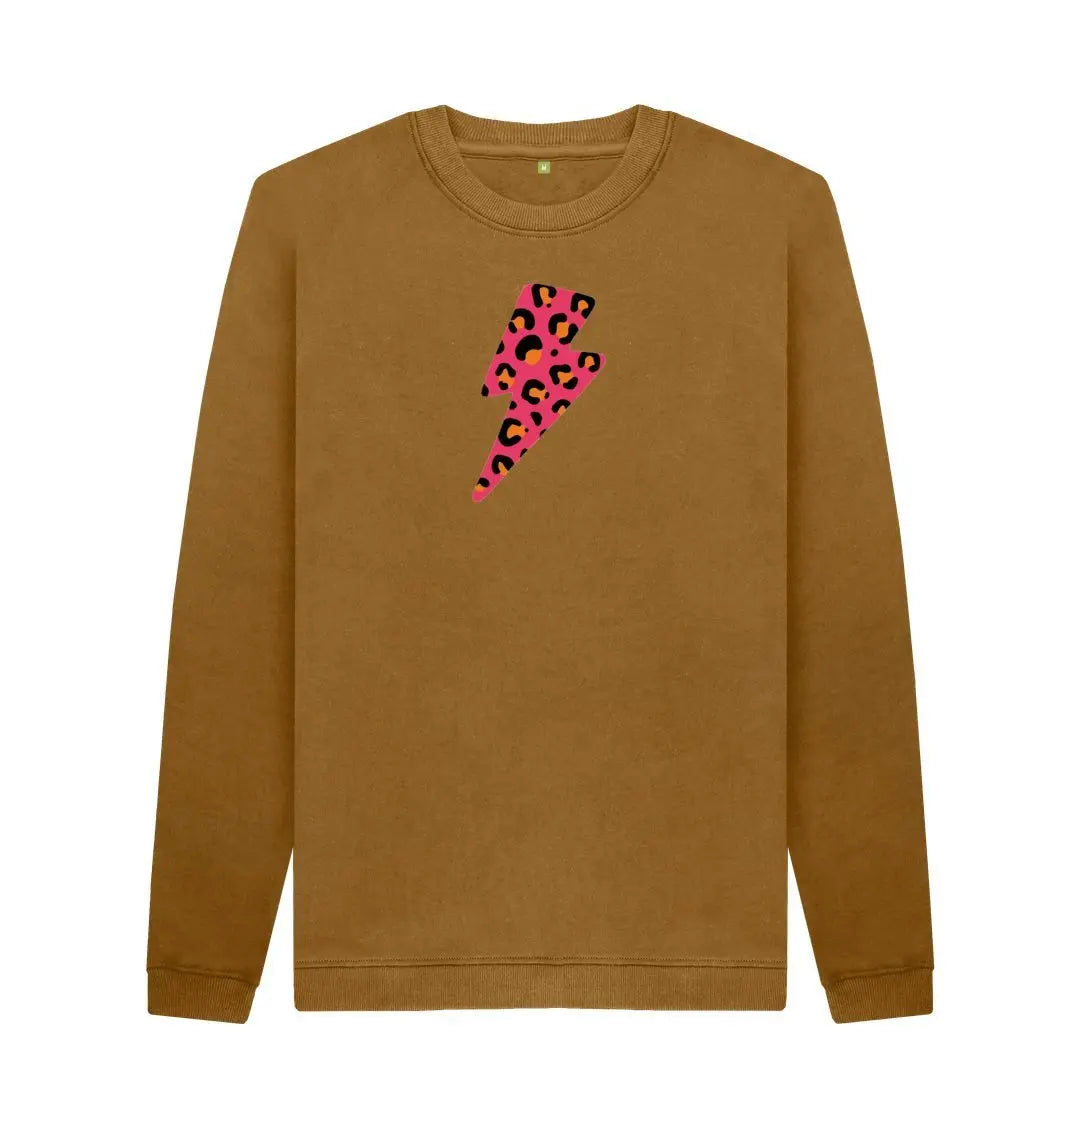 Red and orange leopard print lightning bolt unisex sweater - Trend Tonic